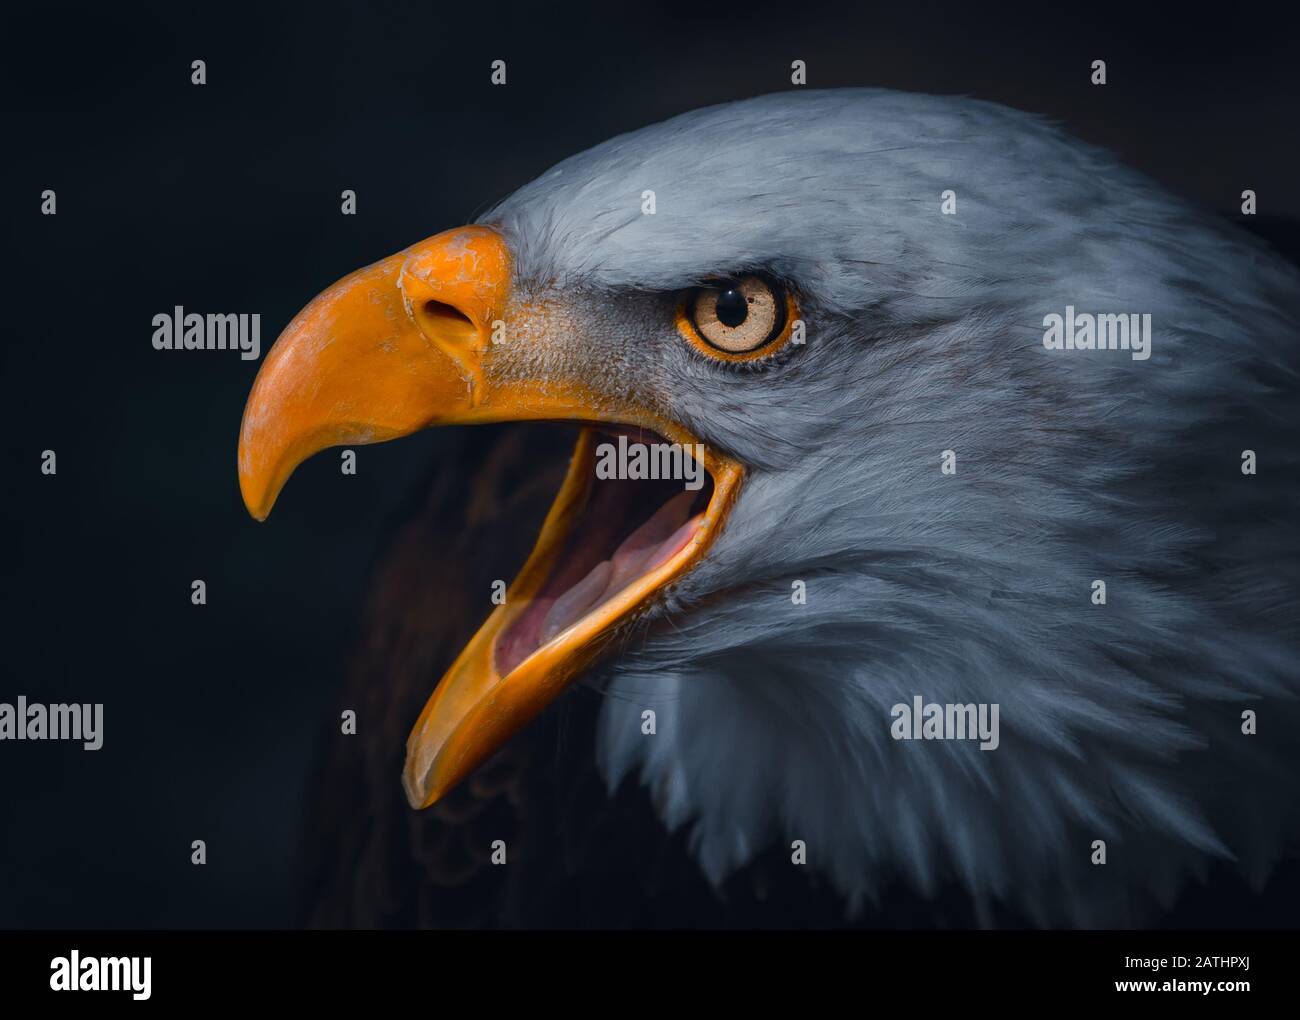 Piercing Closeup View Of Brown American Eagle Eye Stock Photo